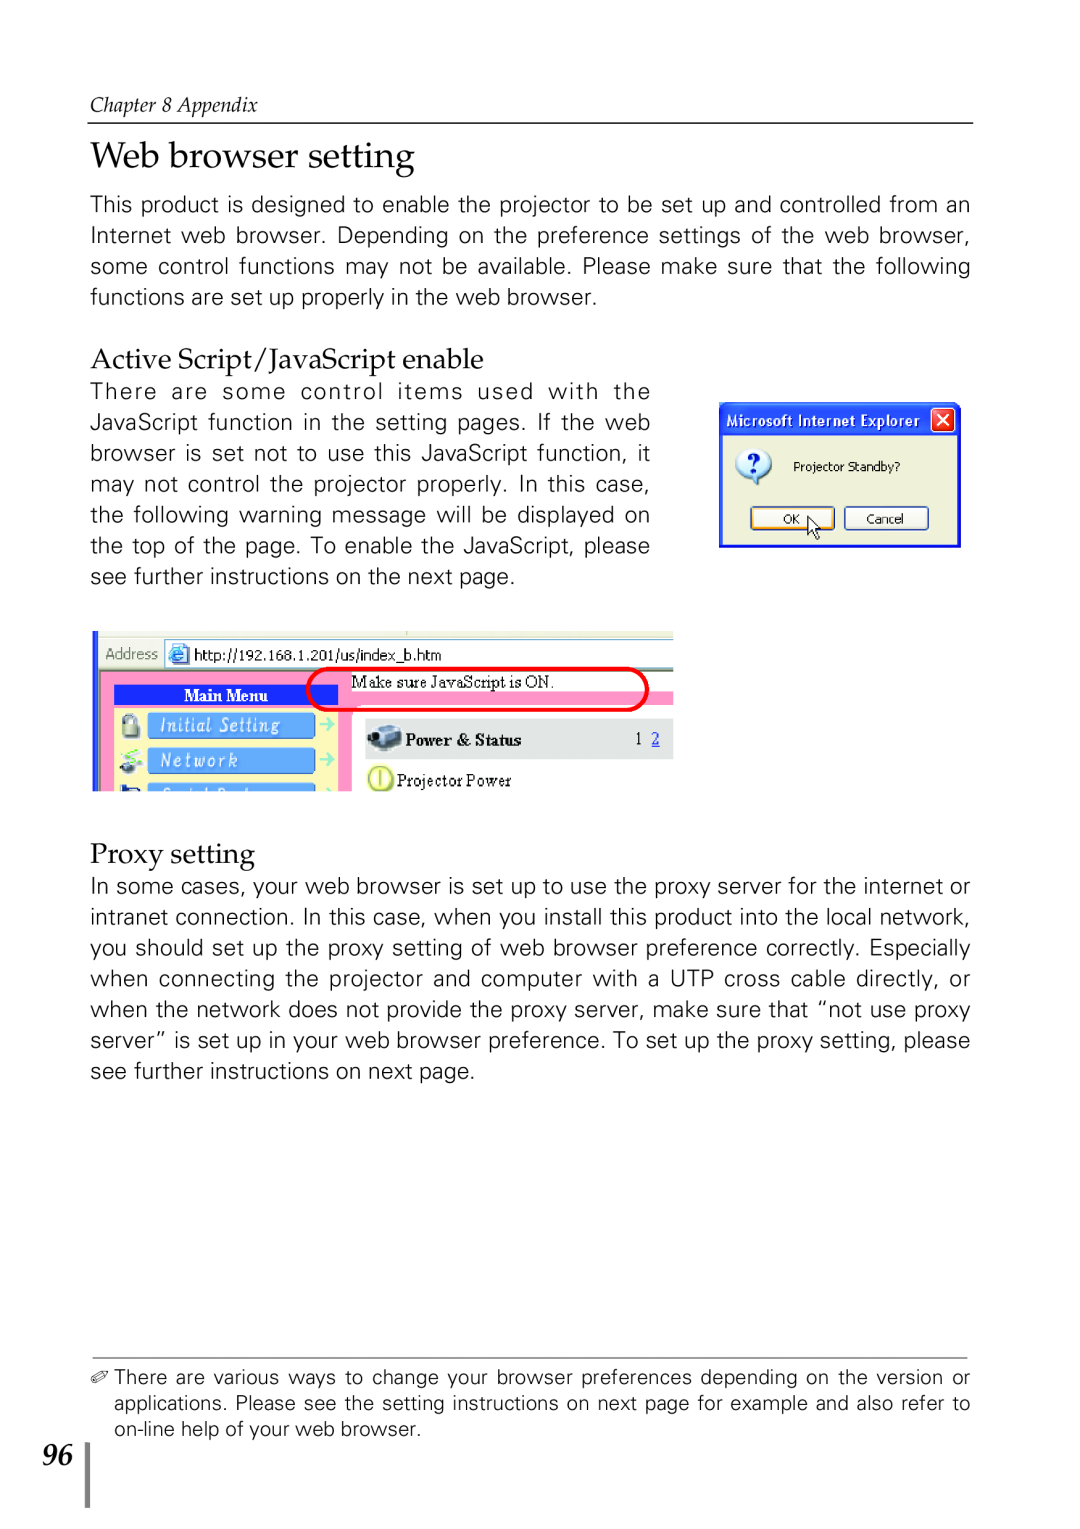 Eiki PjNET-20 owner manual Web browser setting, Active Script/JavaScript enable, Proxy setting 